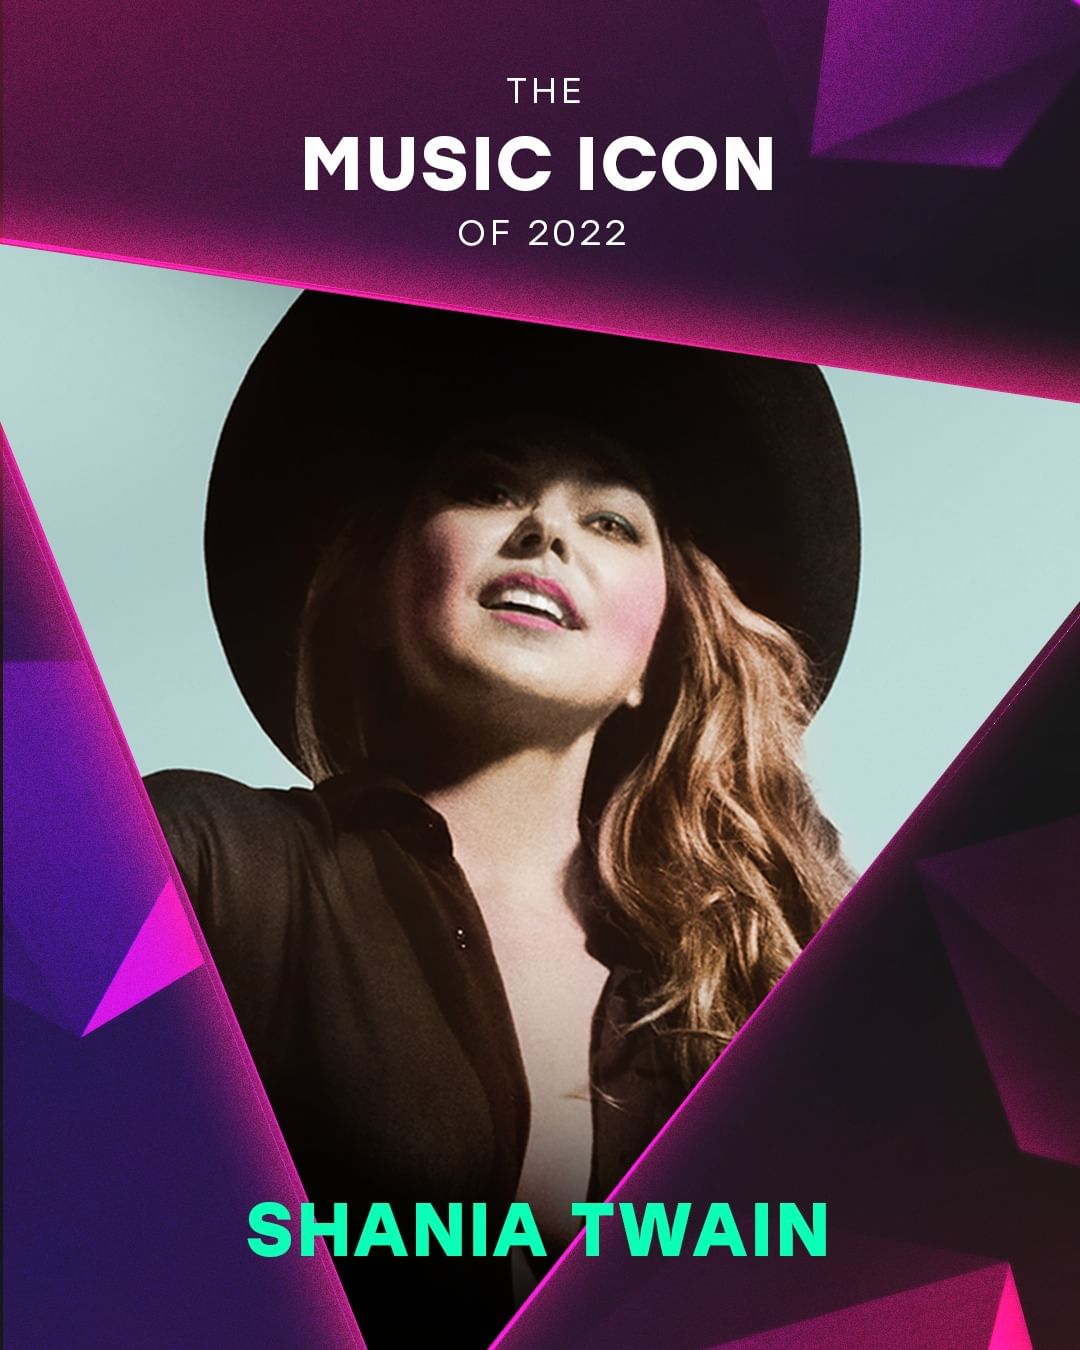 Artista premiată cu Grammy, Shania Twain va primi distincția “Music Icon” la Gala People’s Choice Awards 2022